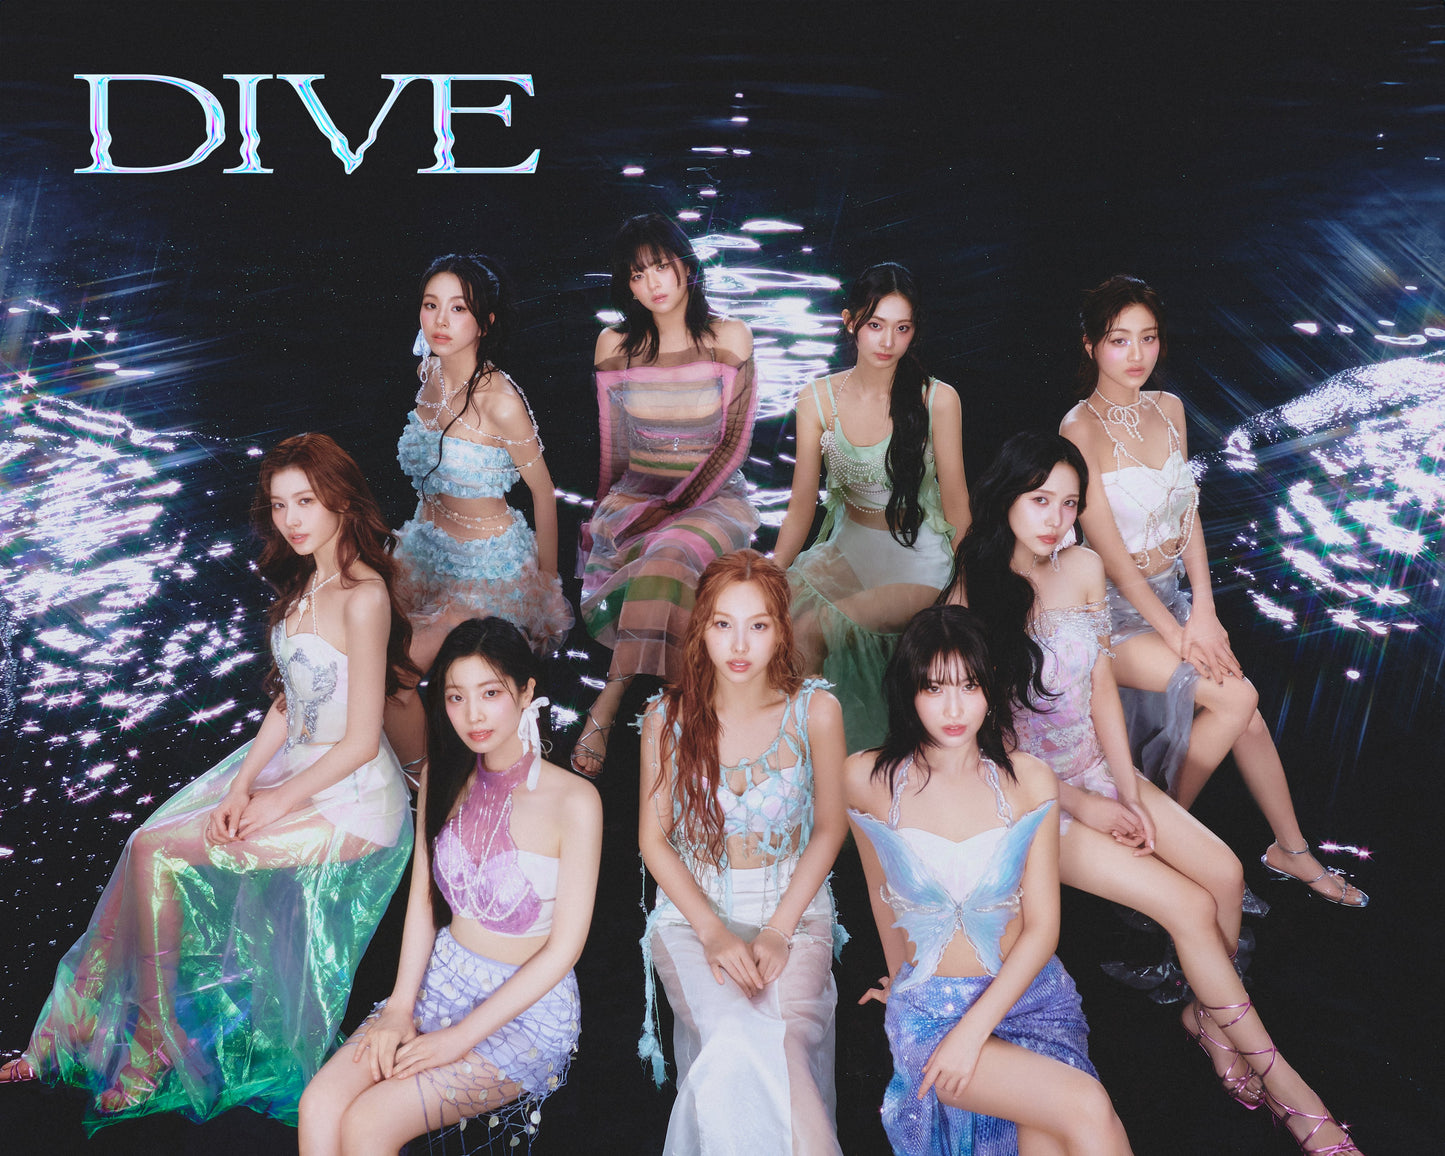 [PRE-ORDER] TWICE - DIVE (Regular Edition CD) - JAPAN 5th ALBUM + POB